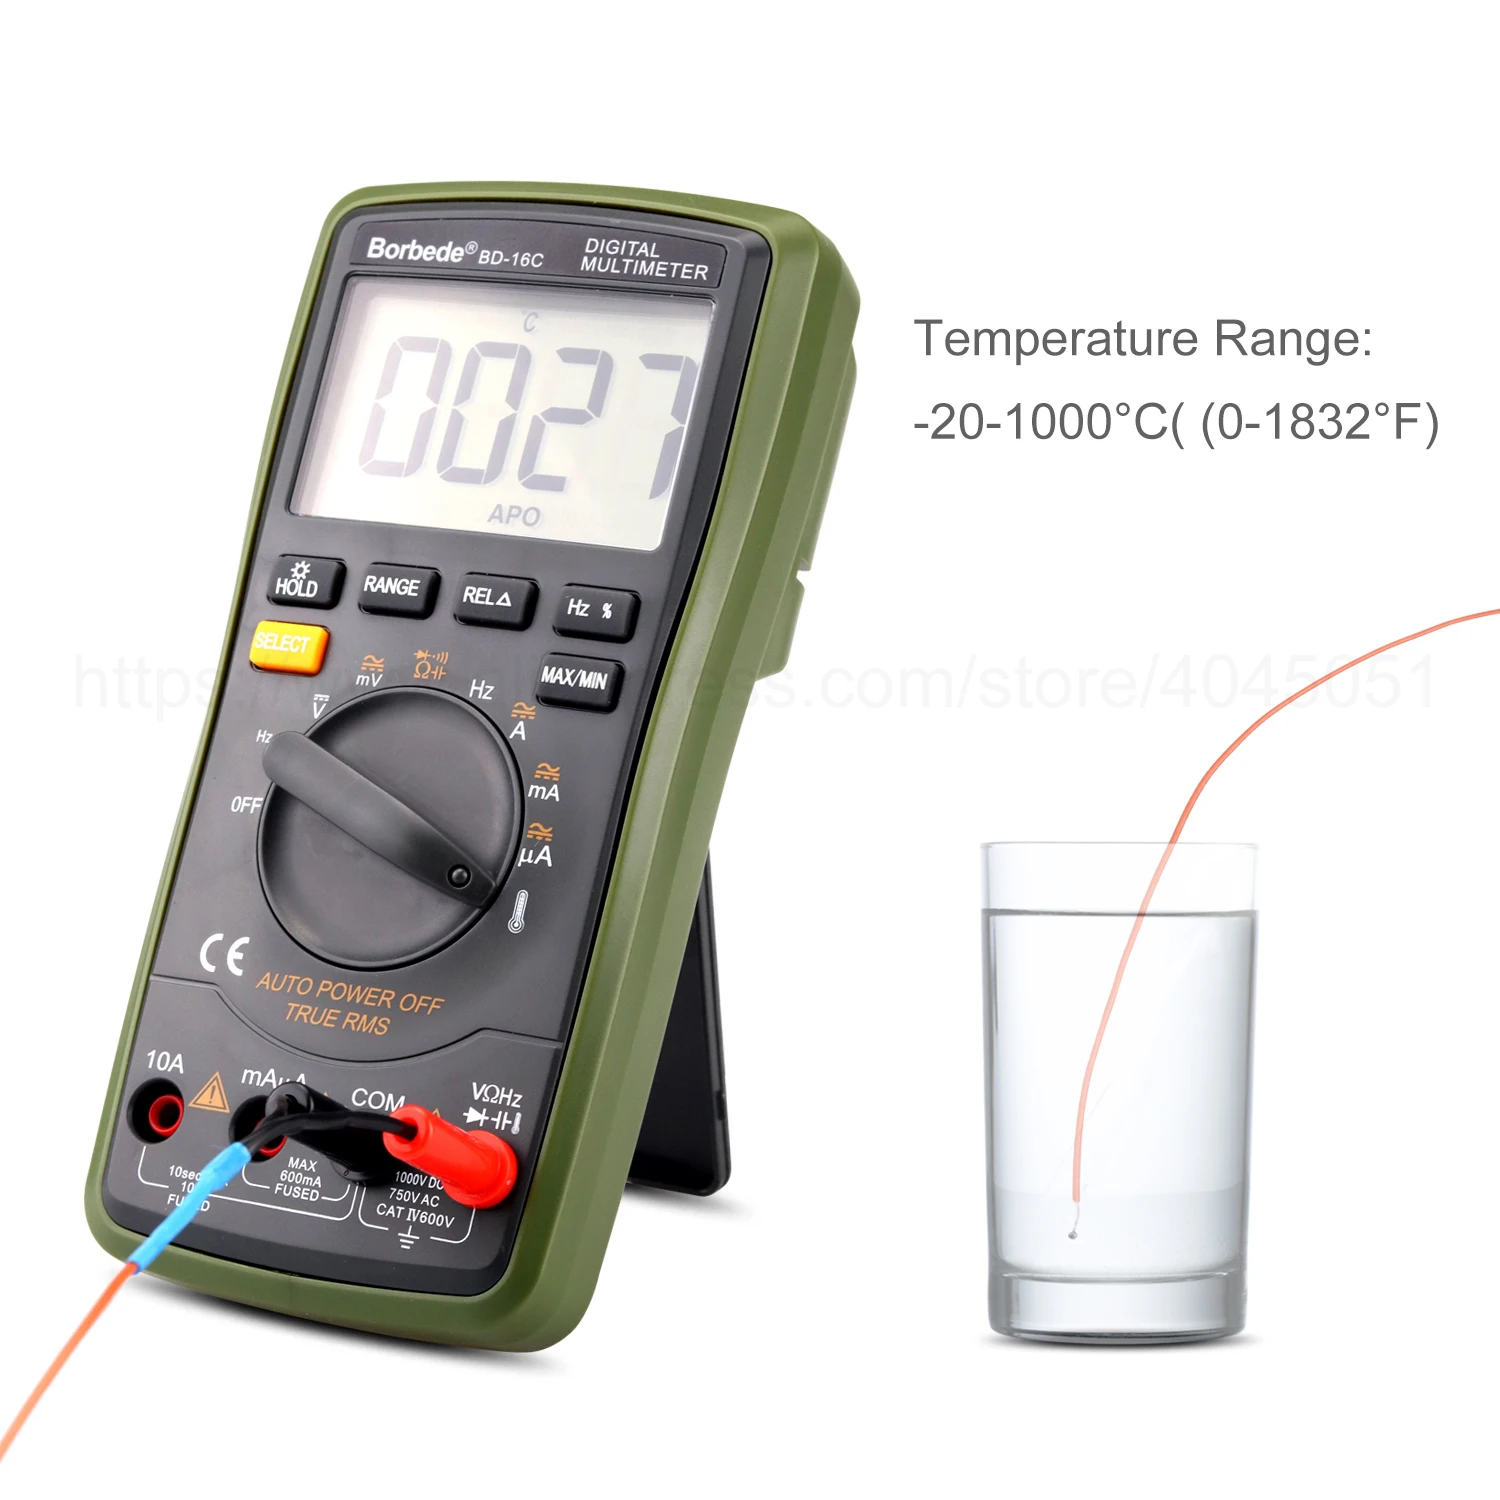 Borbede Auto Digital Multimeter Range BD-16C of 6000 Counts AC DC Resistance Temperature Capacitance True RMS Diode Tester